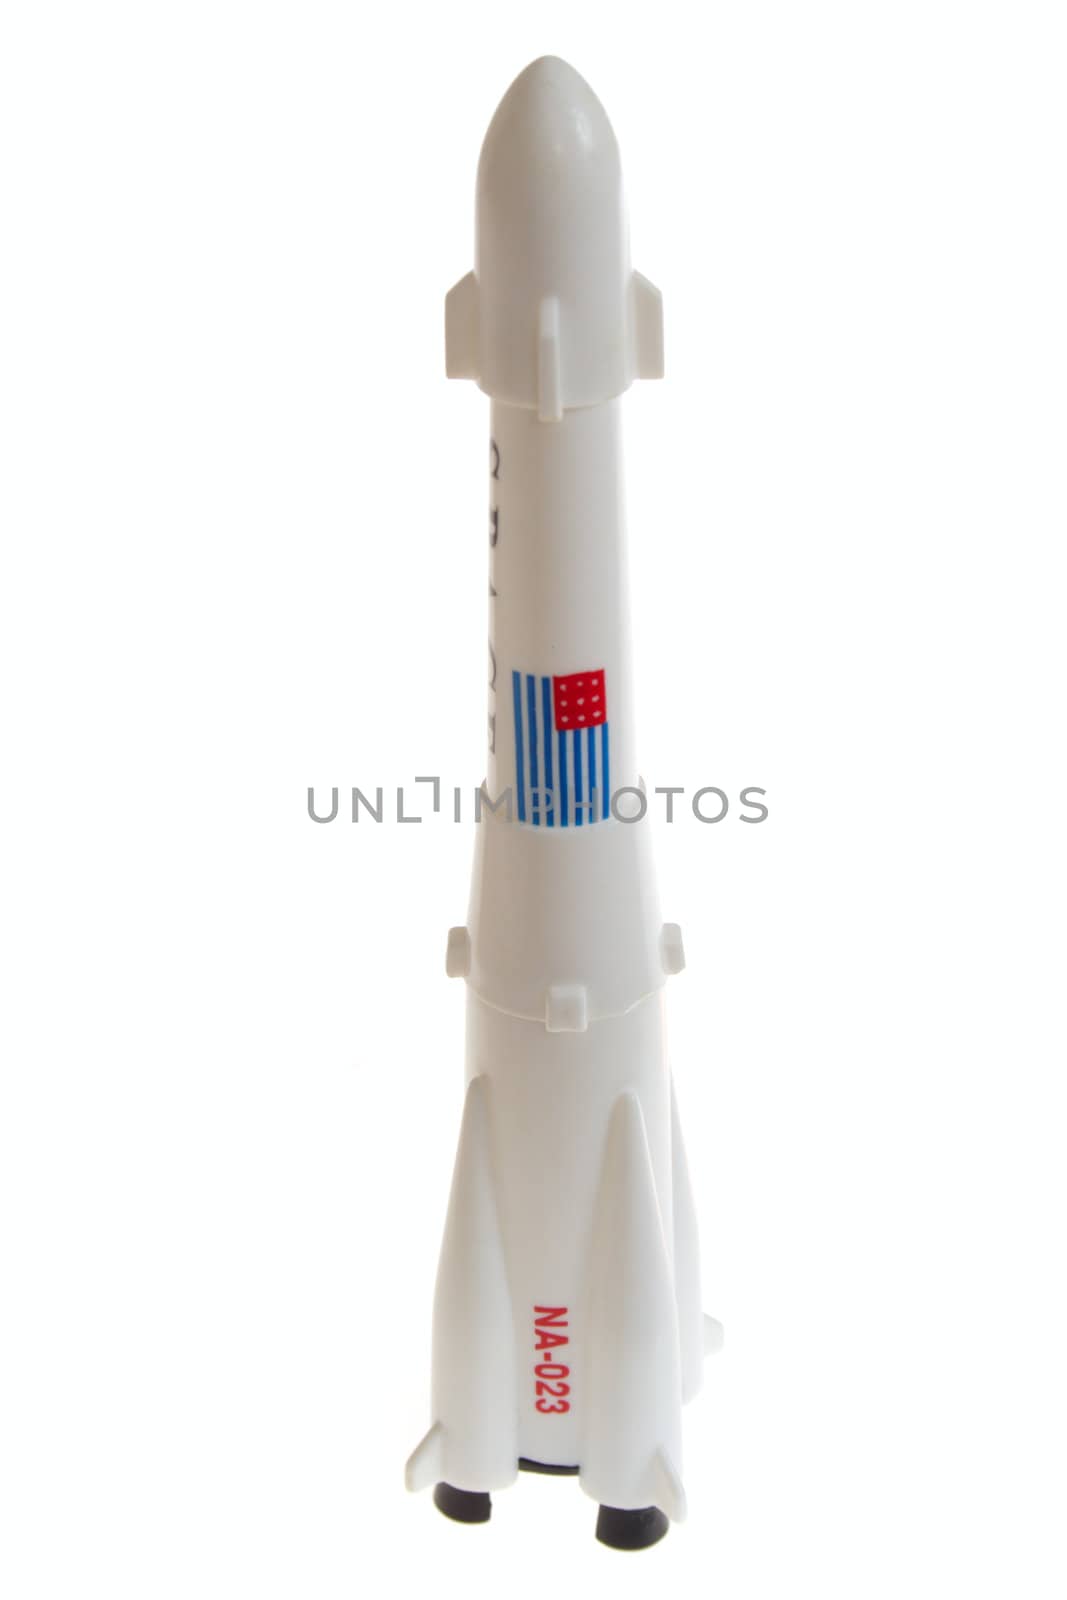 plastic space rocket by aguirre_mar